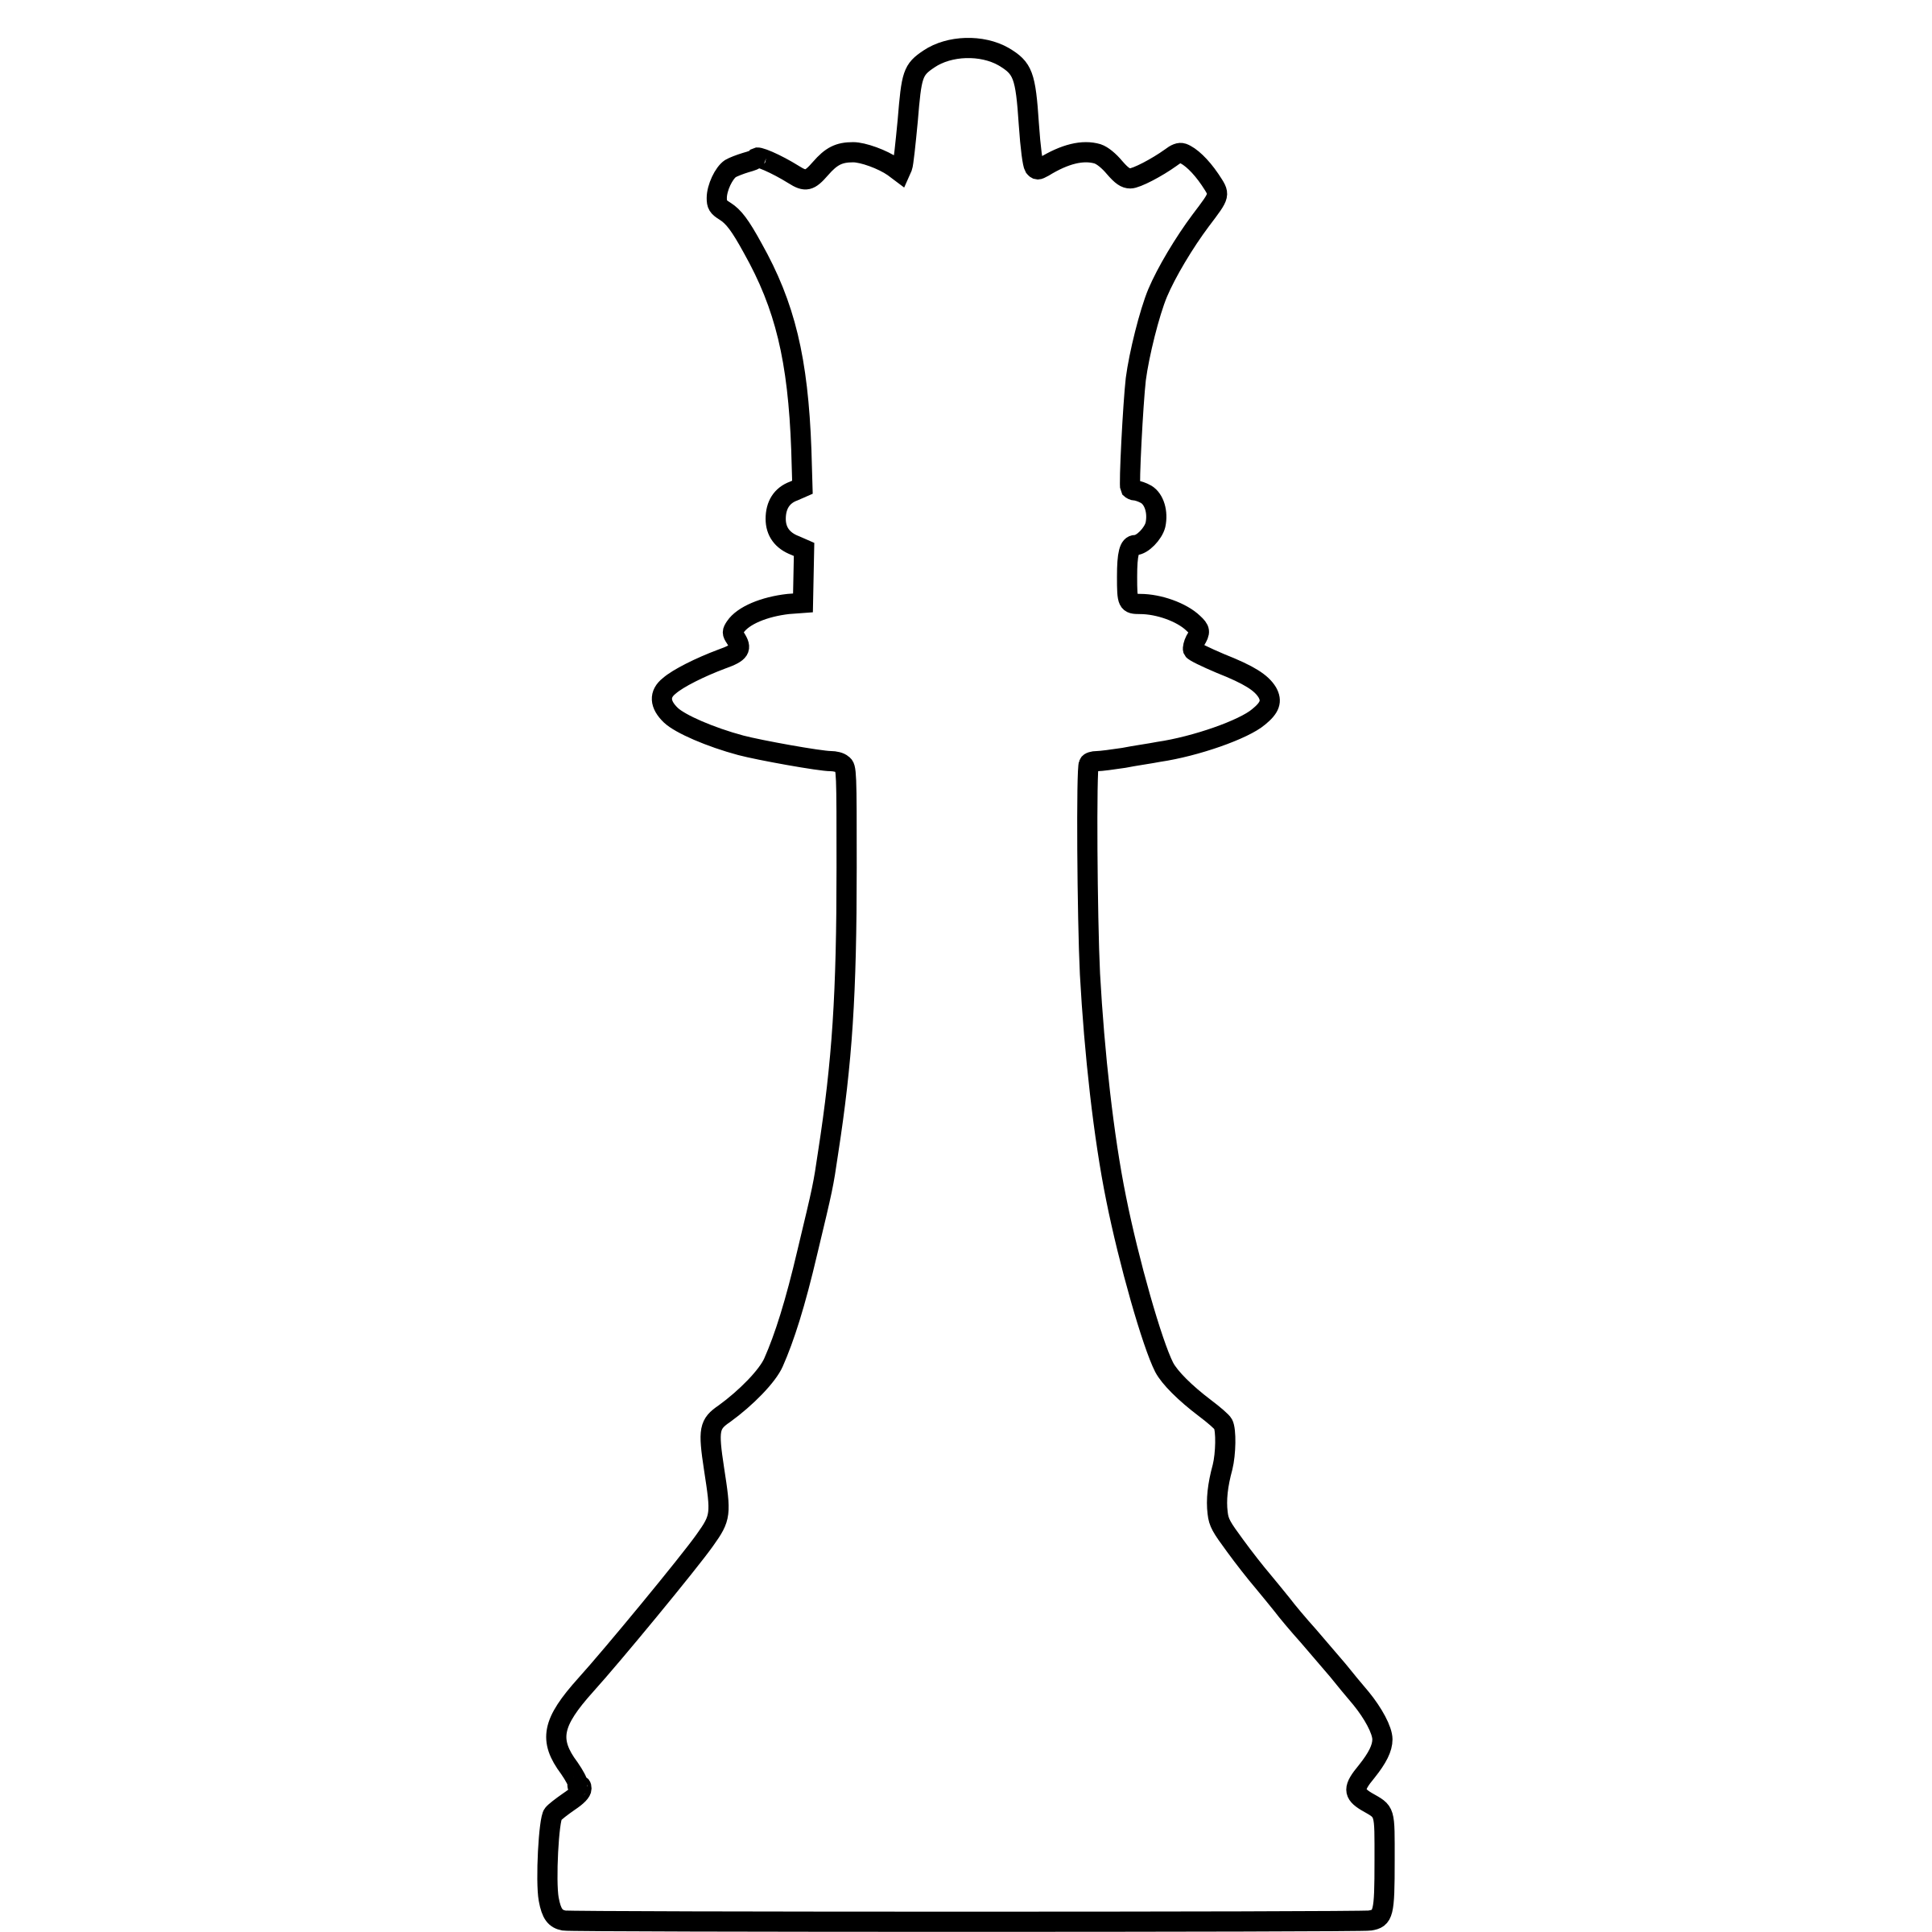 White Silhouette Chess Piece REMIX – Queen / Dama SVG Clip arts